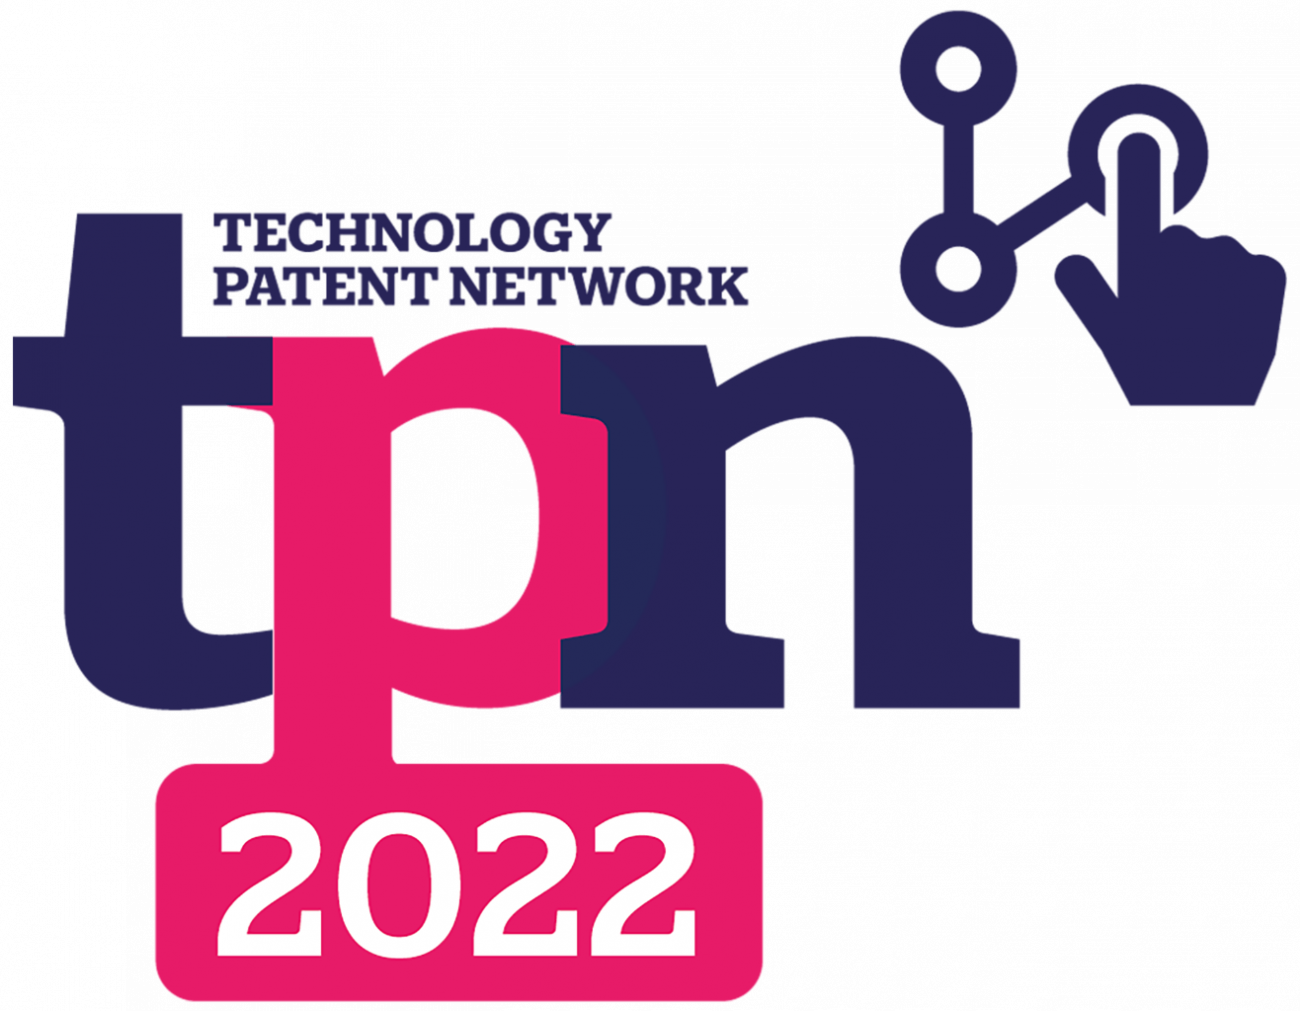 Technology Patent Network 2022